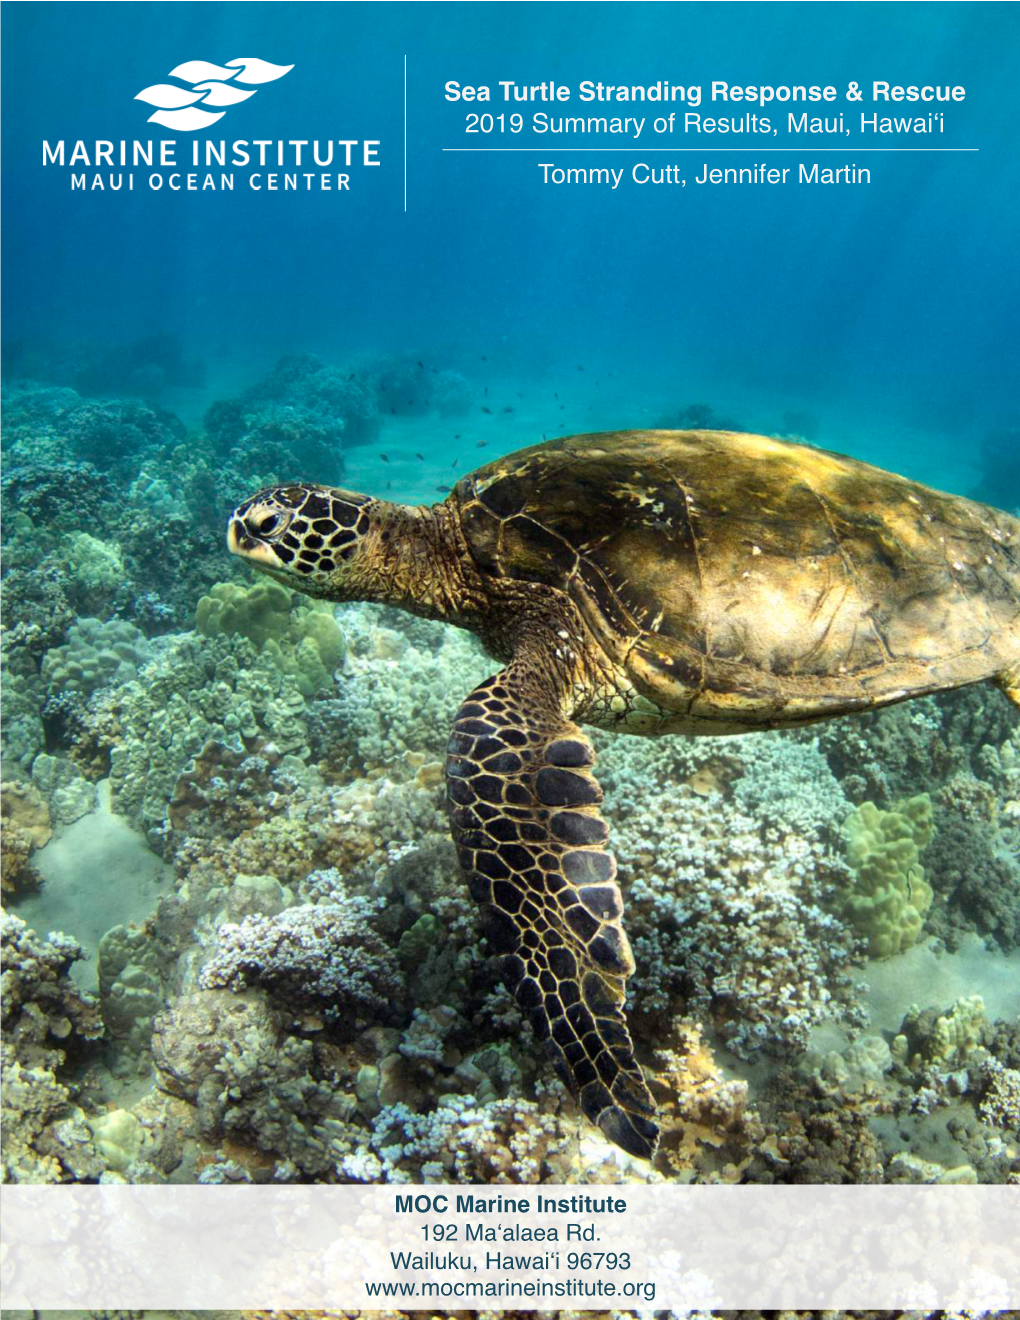 Sea Turtle Stranding Response & Rescue 2019 Summary of Results